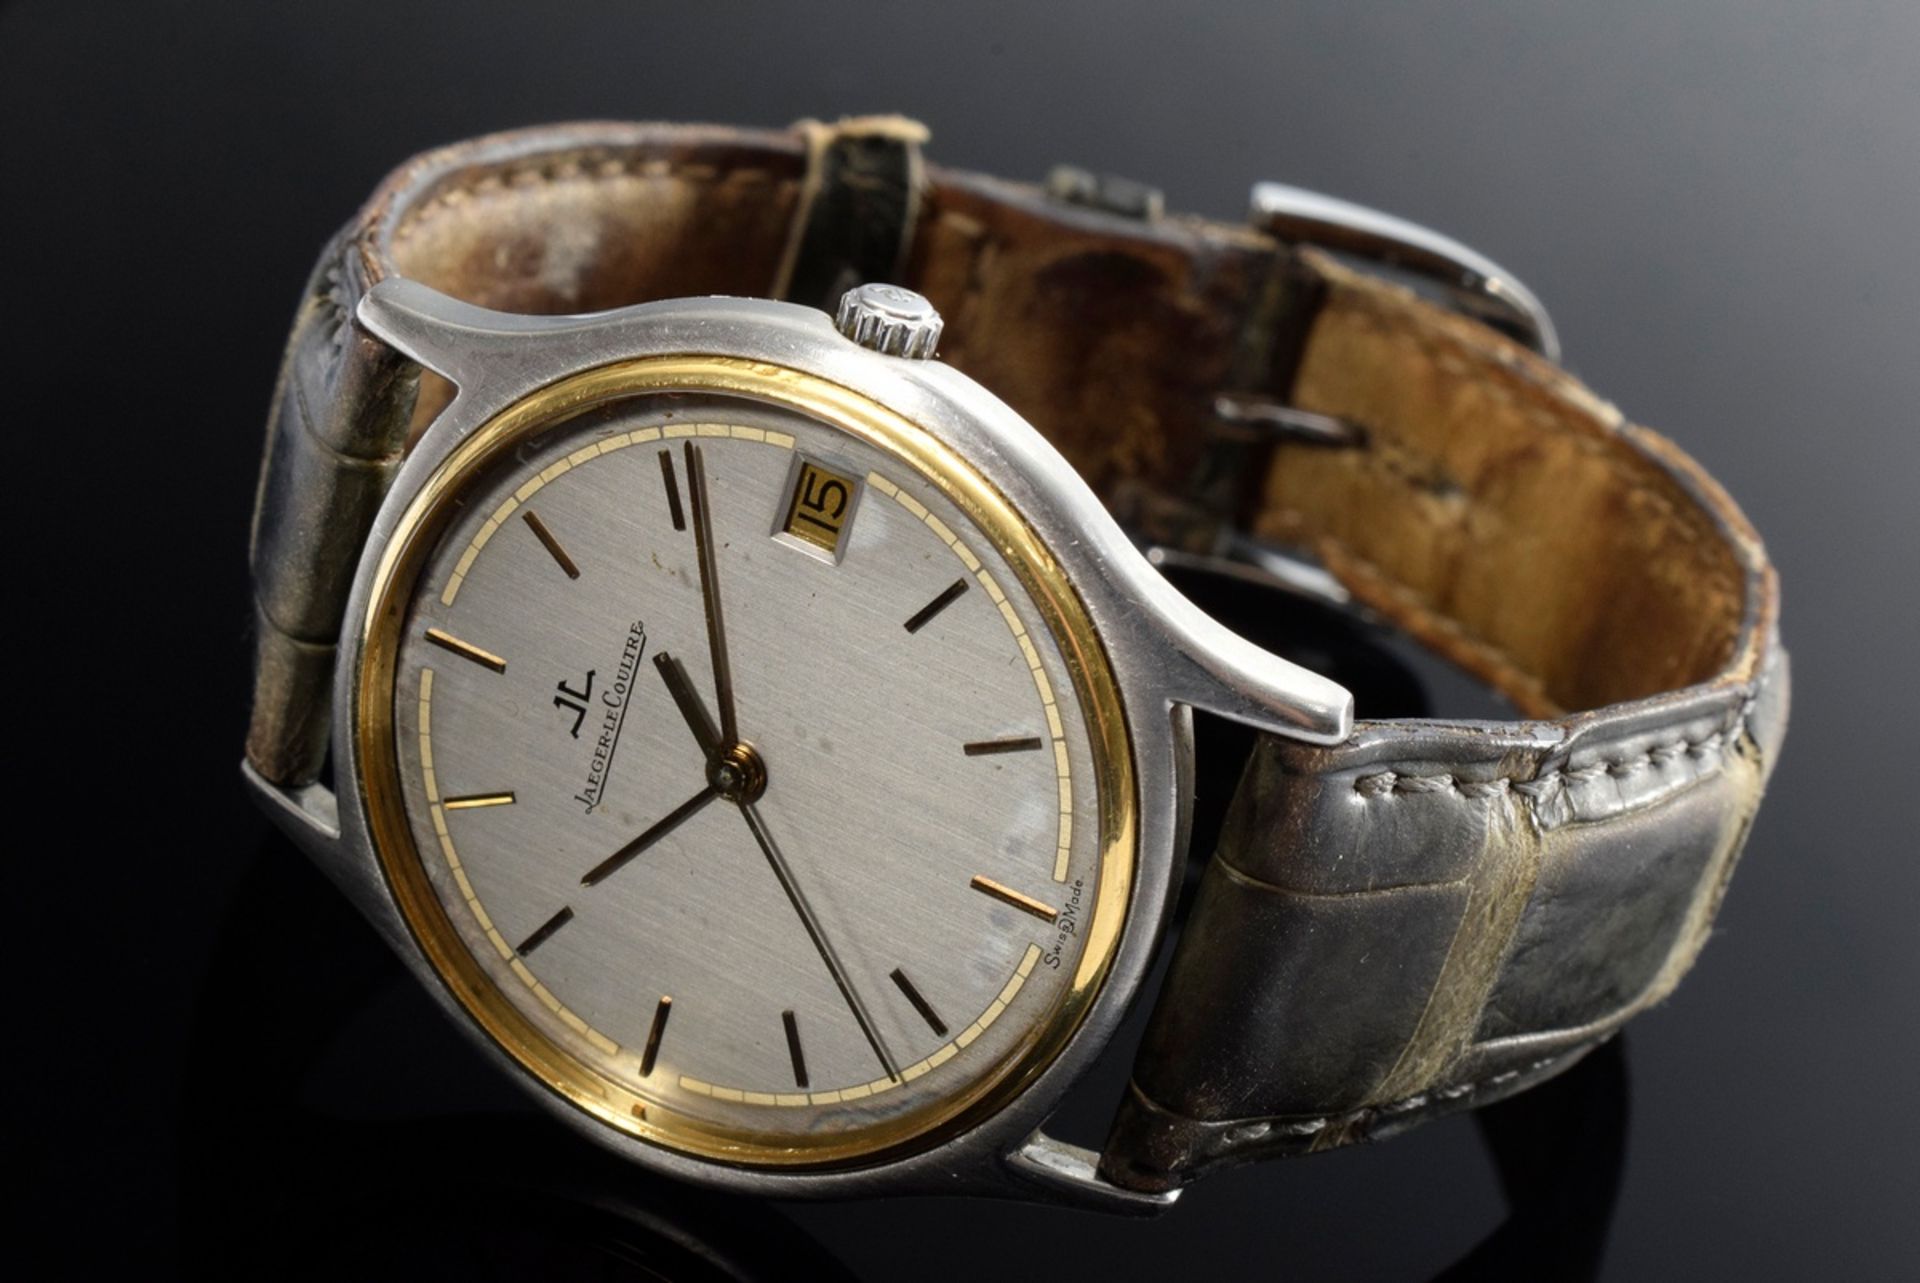 Jaeger-LeCoultre steel men's wristwatch, quartz movement, large seconds, date, hour and minute indi